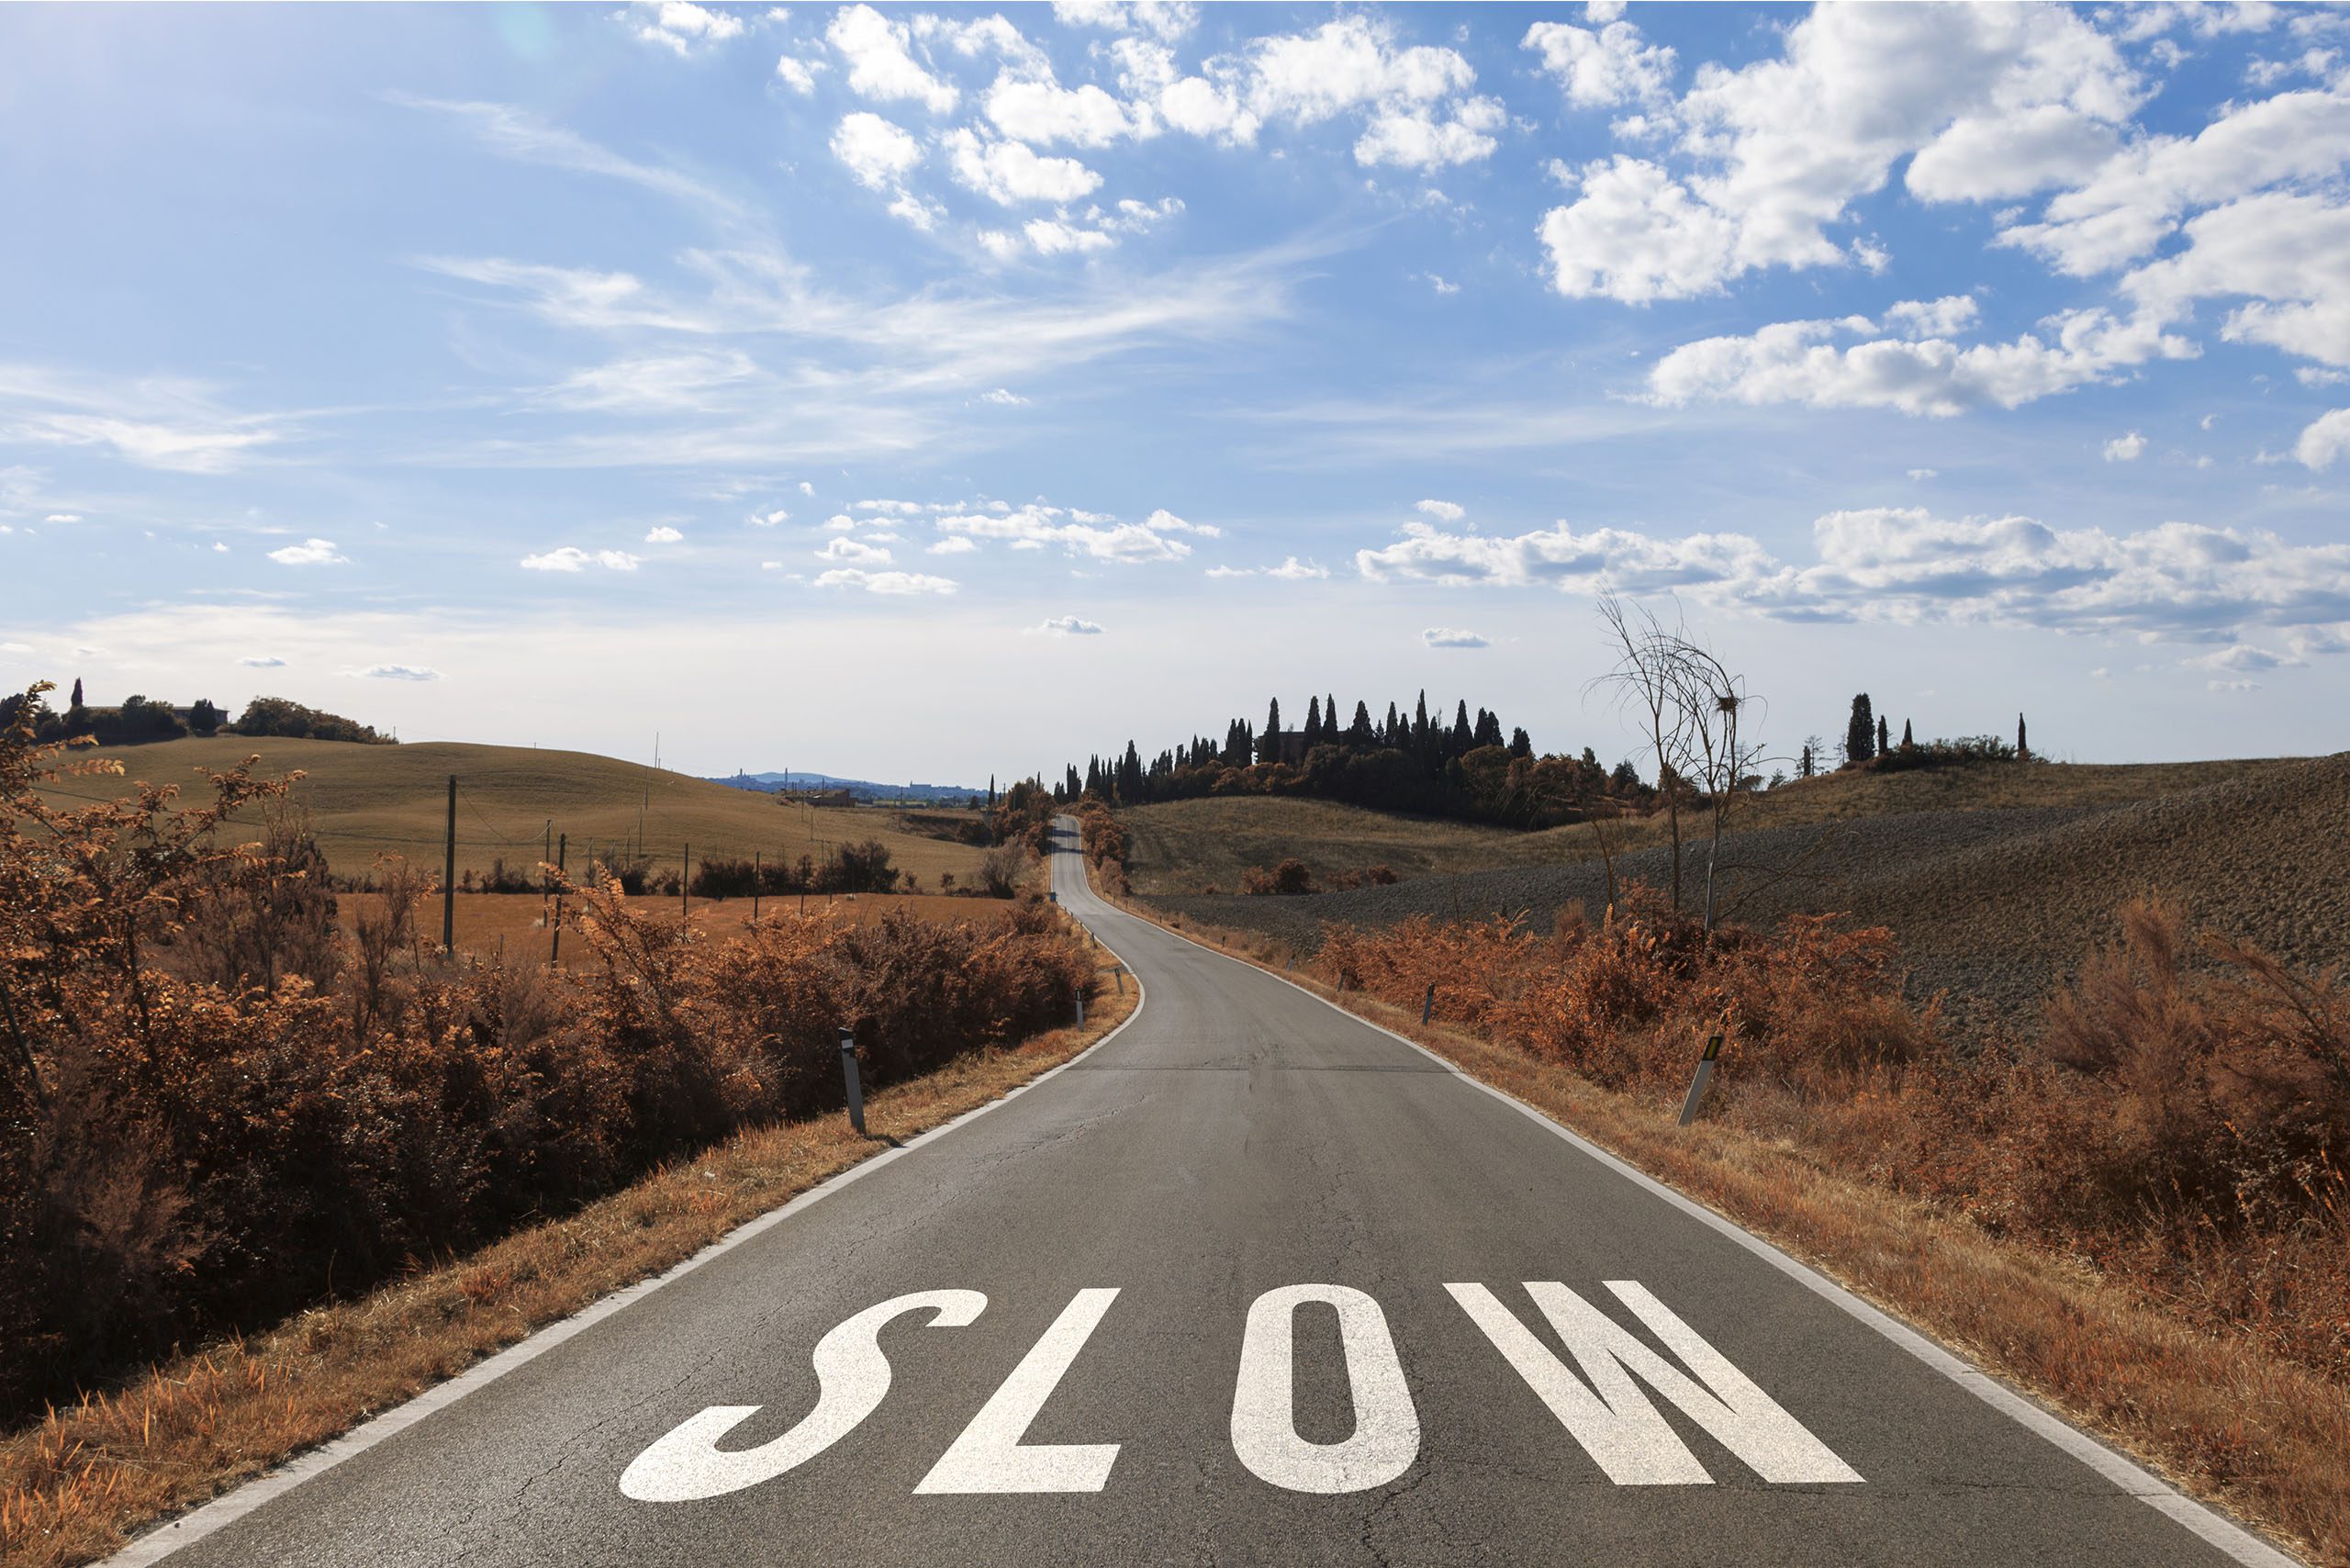 Slow road